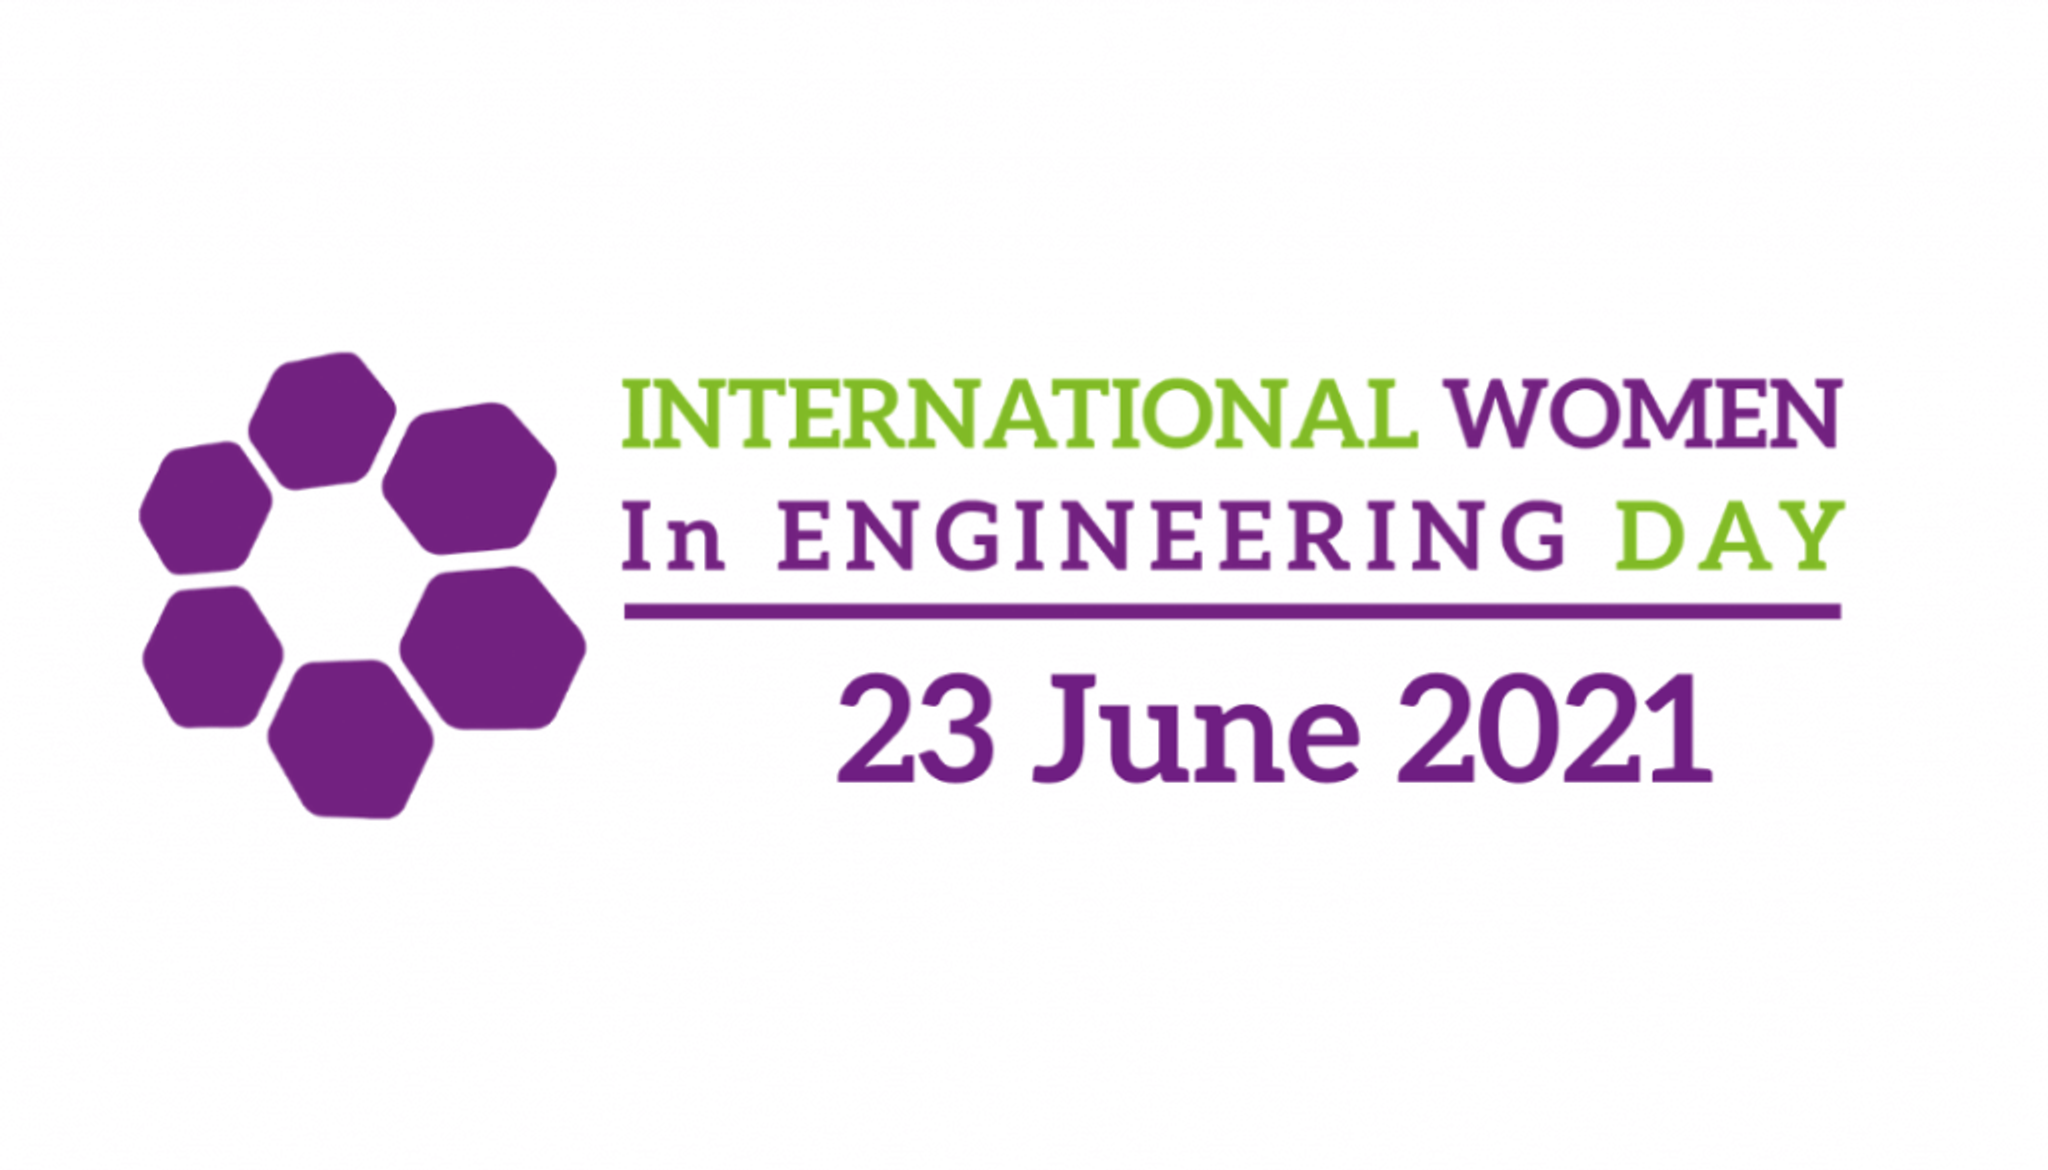 International Women in Engineering Day, 23 June 2021, logo